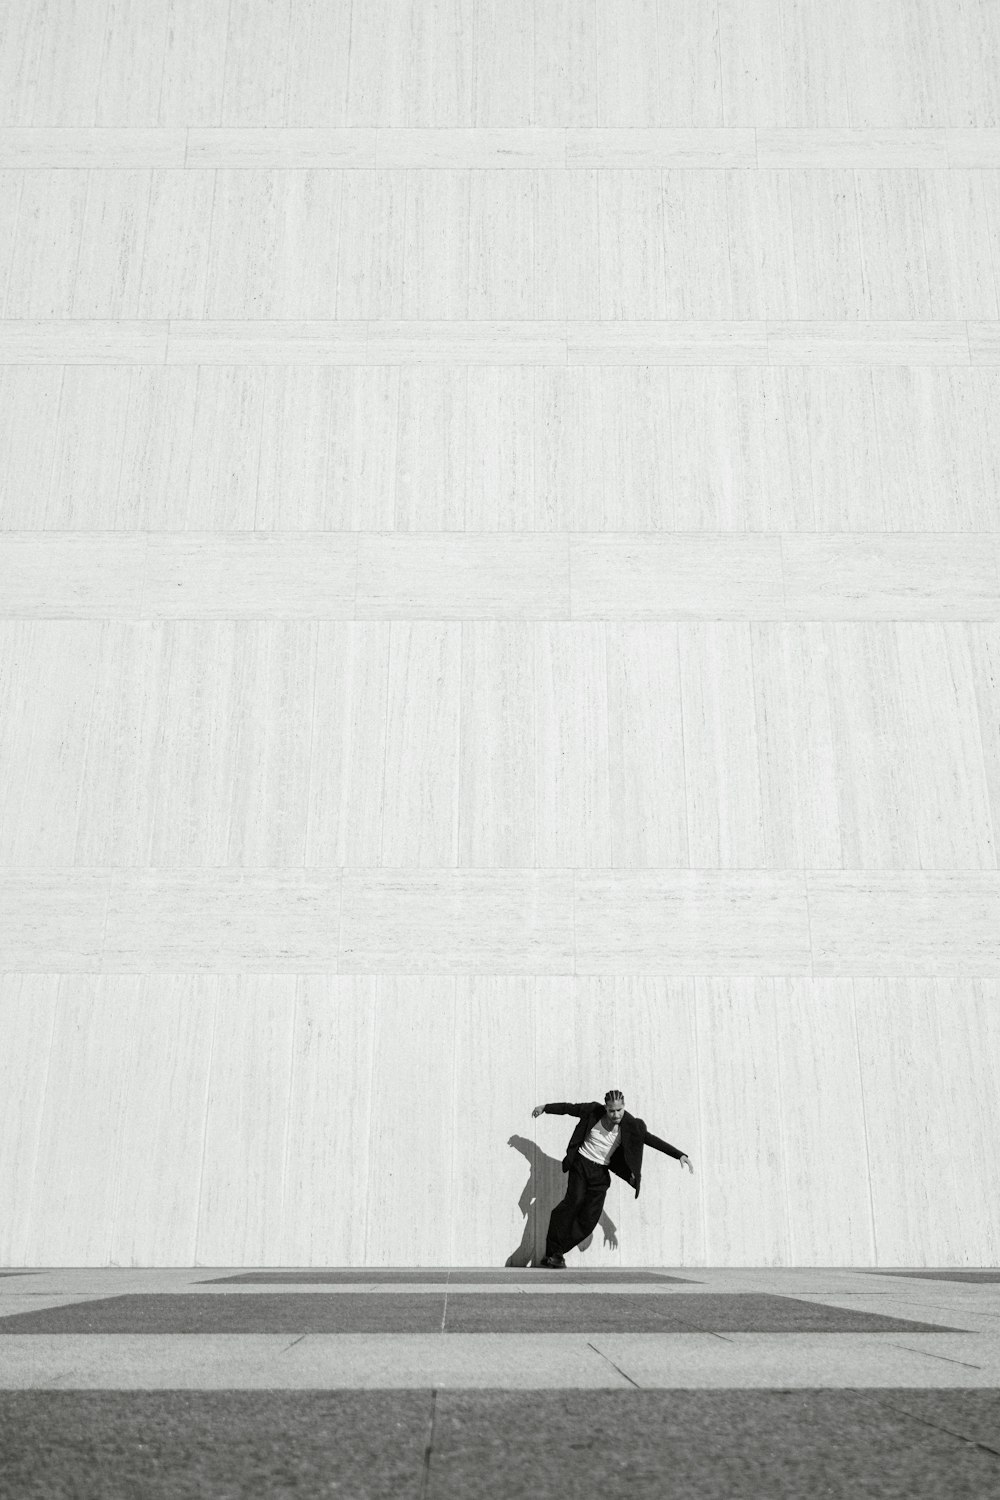 a man riding a skateboard across a cement floor